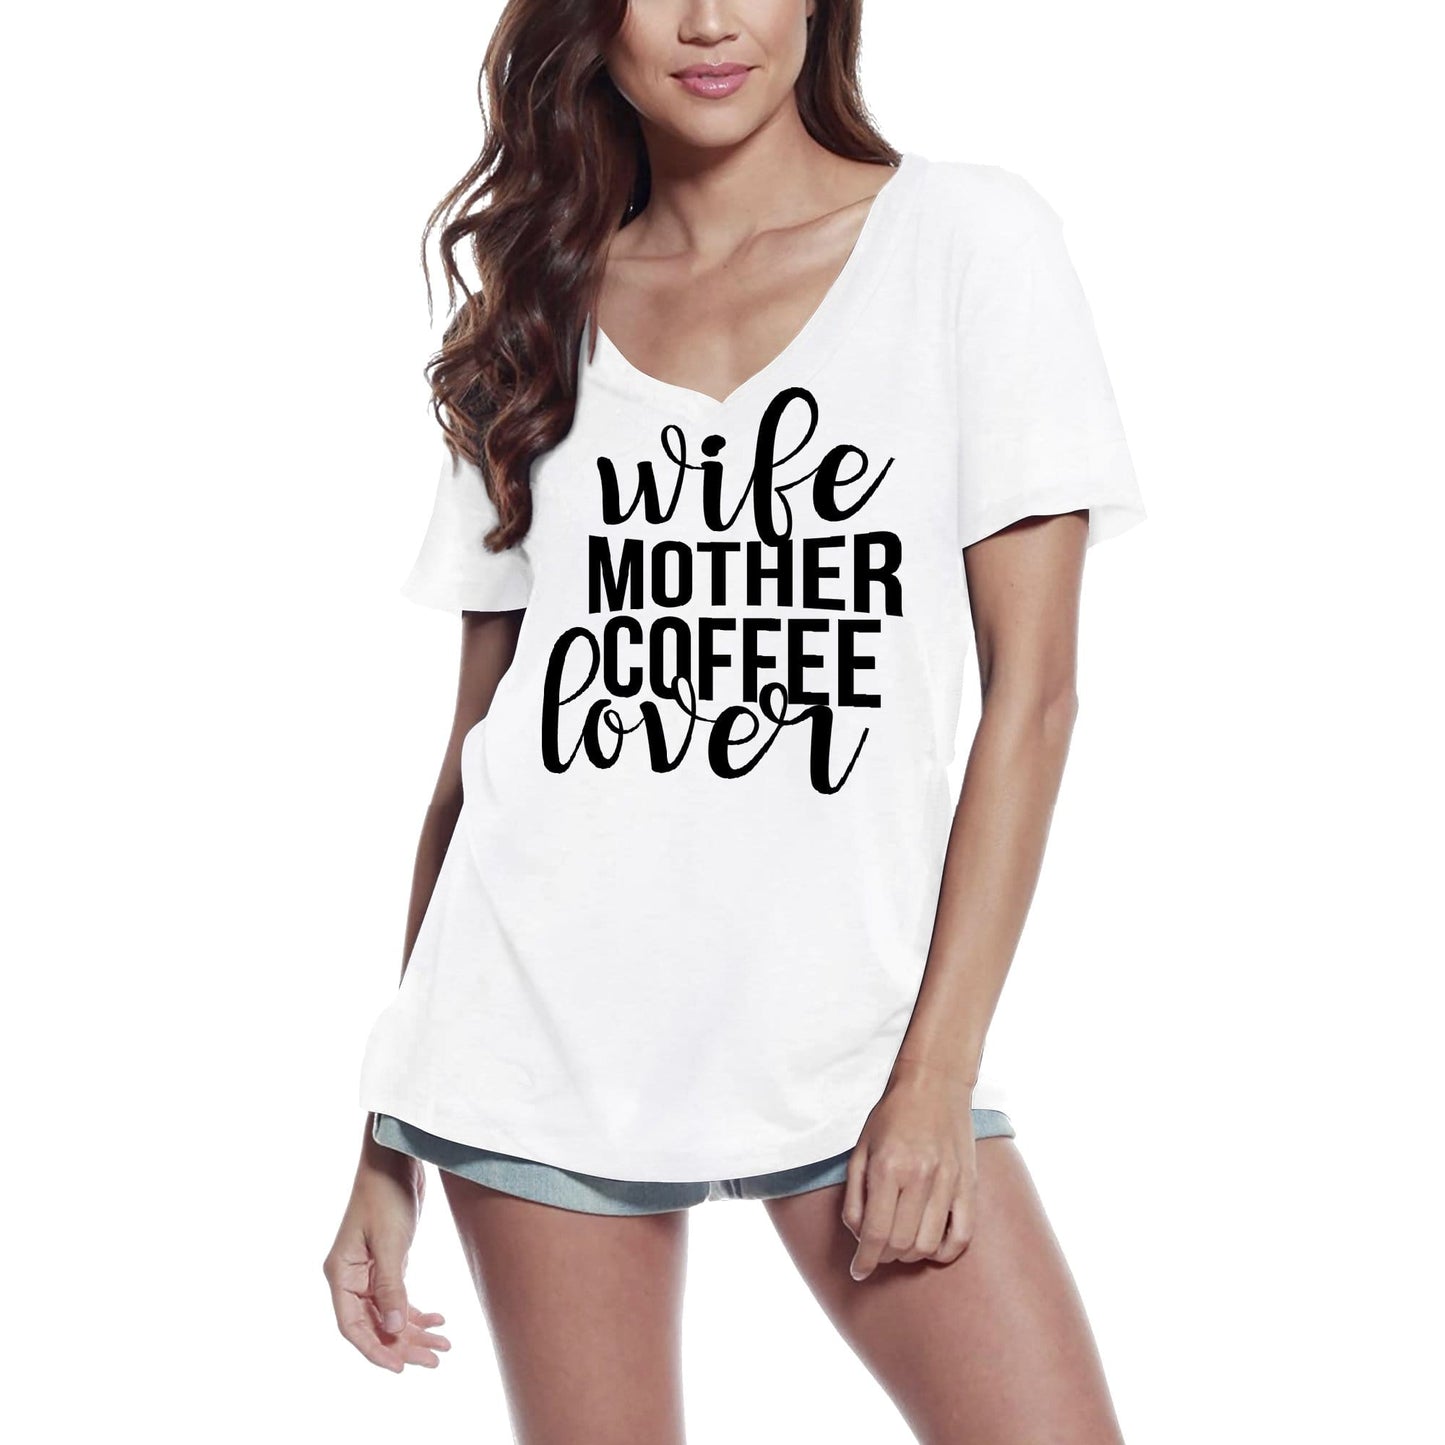 ULTRABASIC Damen-T-Shirt, Ehefrau, Mutter, Kaffeeliebhaber – lustige kurzärmelige T-Shirt-Oberteile